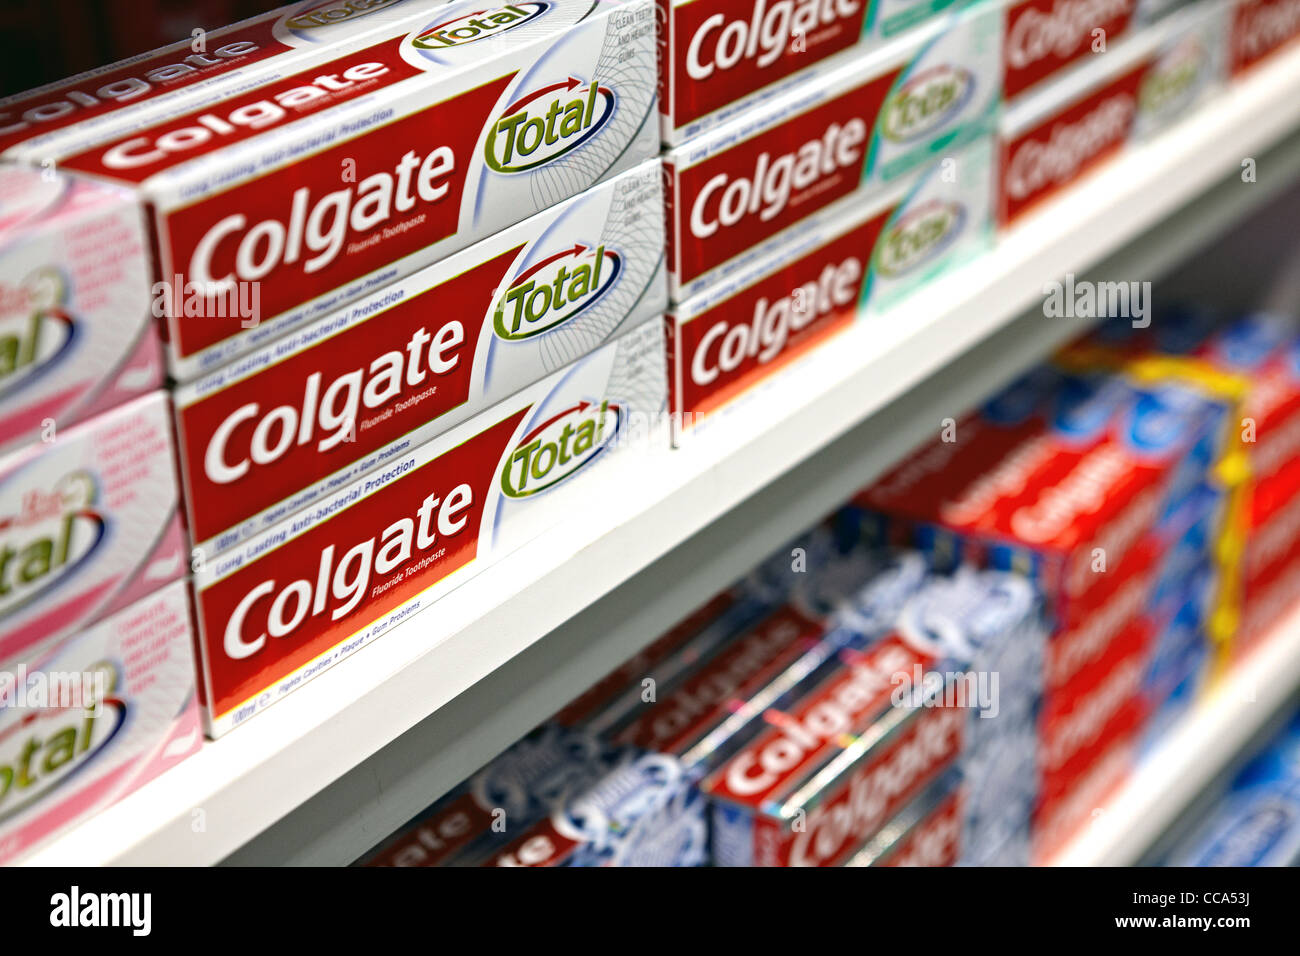 Tubos de pasta dental Colgate Total retratada en un supermercado. Foto de stock